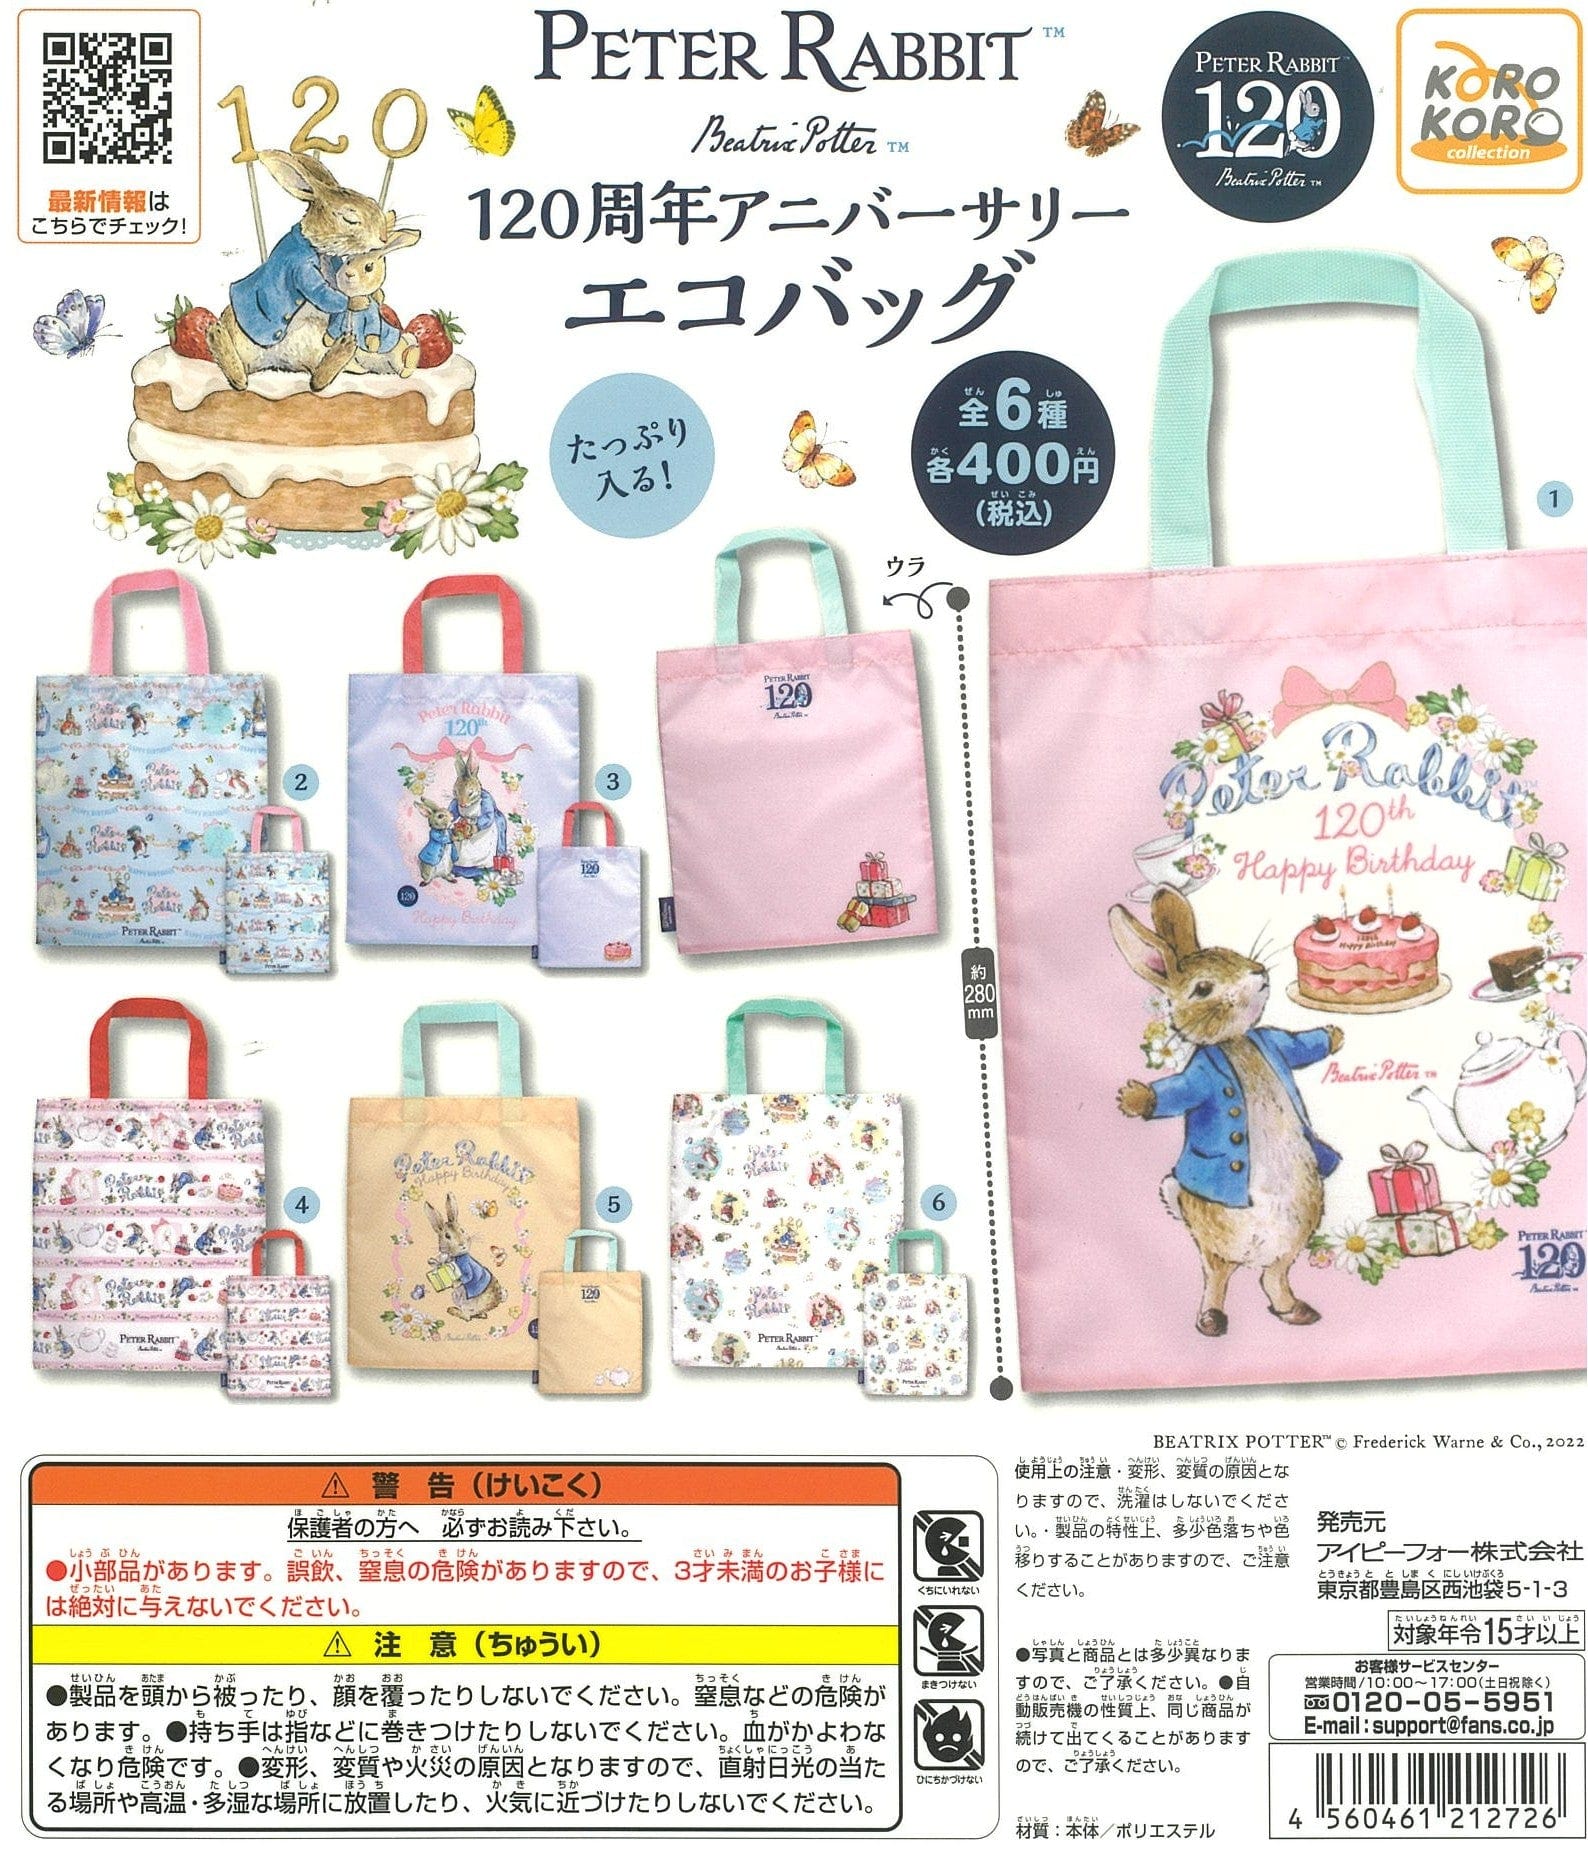 KoroKoro Collection CP1919 Peter Rabbit (TM) 120th Anniversary Eco Bag